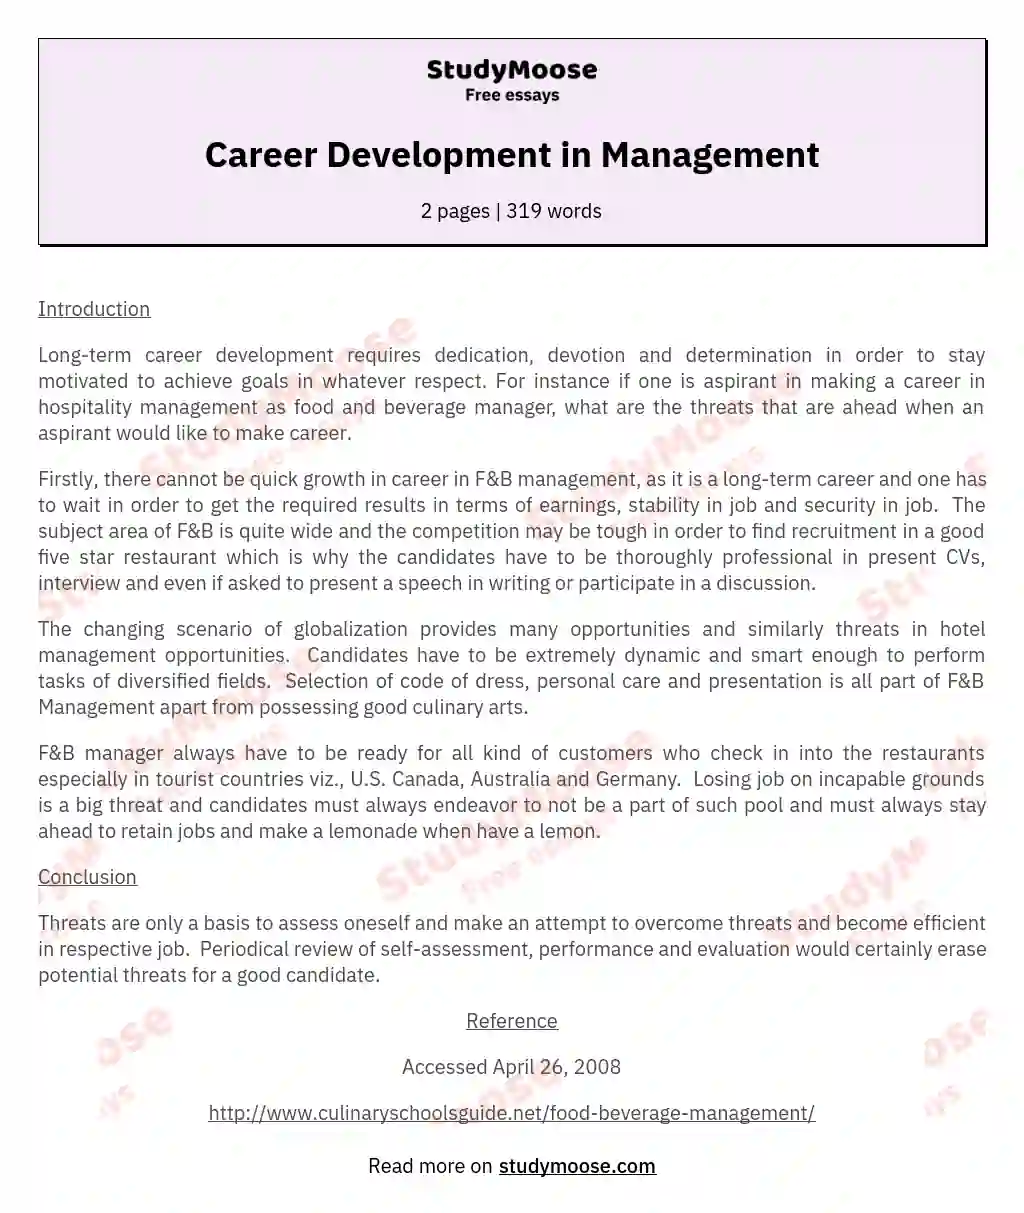 Career Development in Management